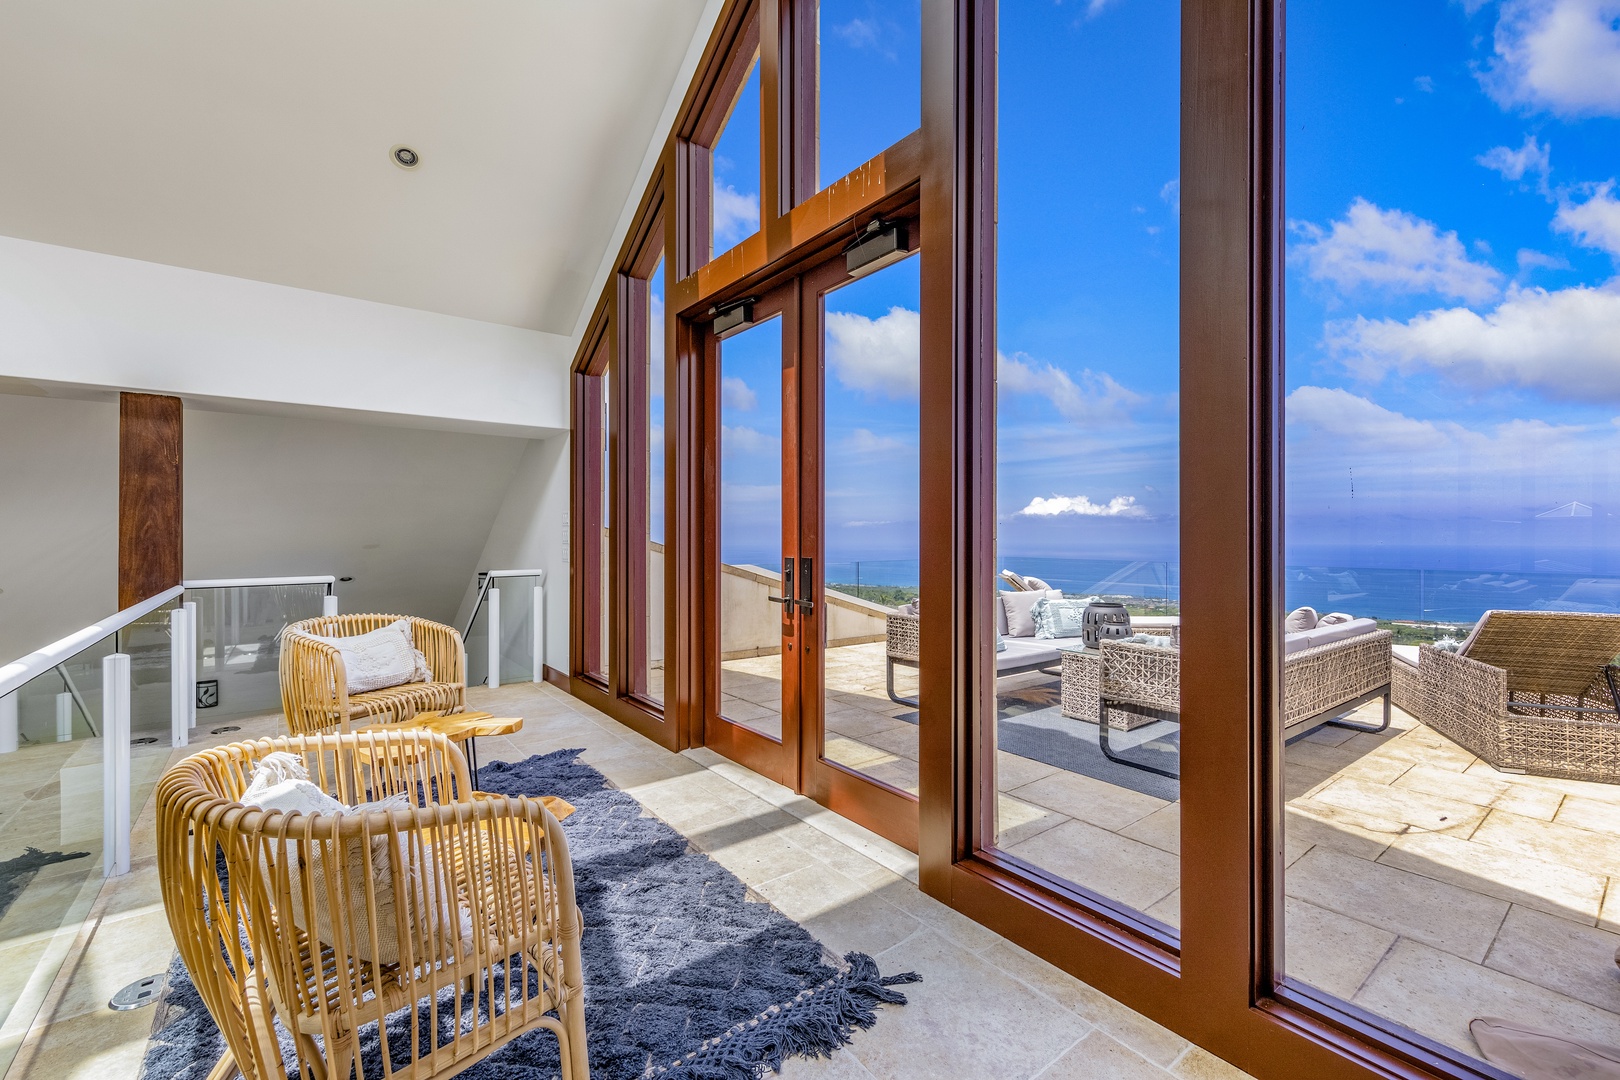 Kailua Kona Vacation Rentals, Kailua Kona Estate** - Enjoy expansive ocean views from the loft and balcony.